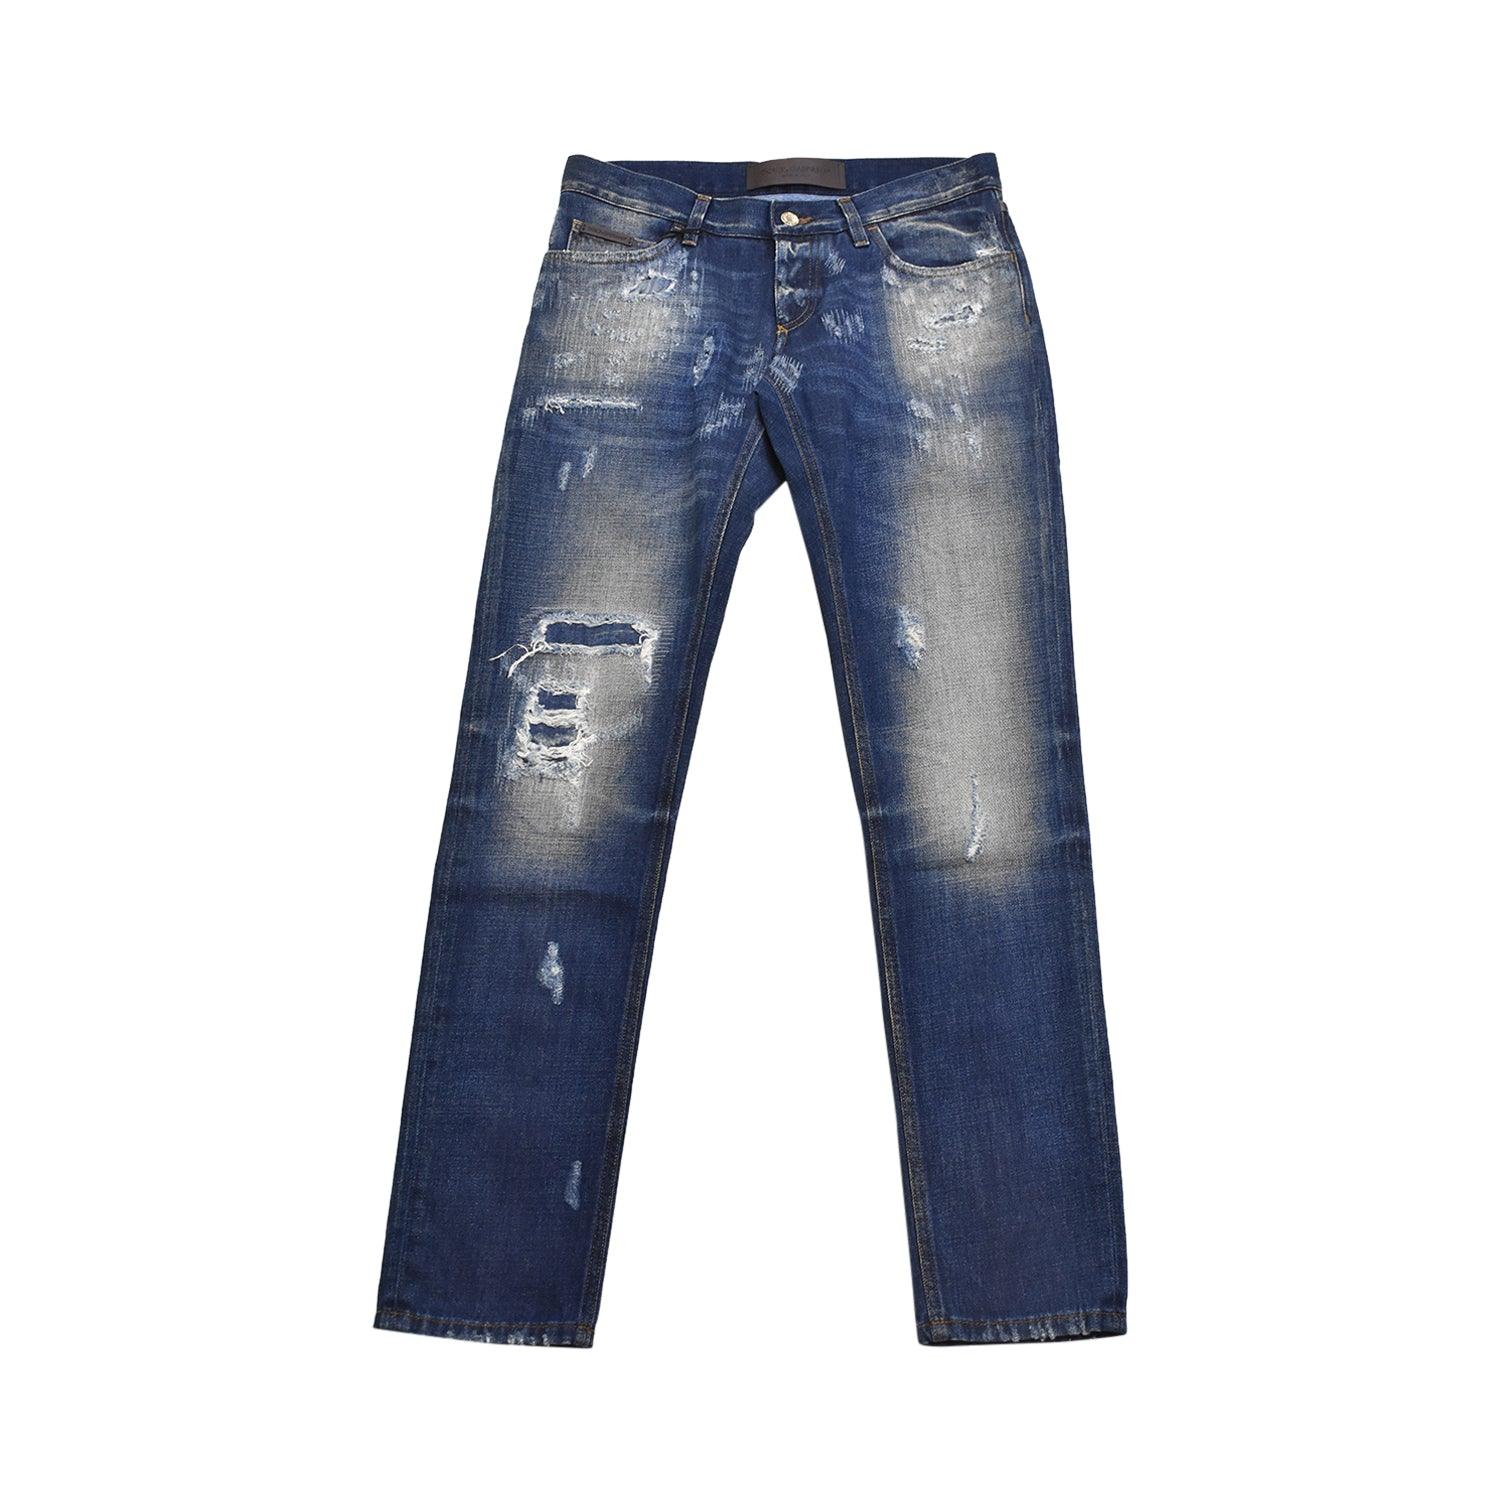 Dolce & Gabbana Jeans - Men's 46